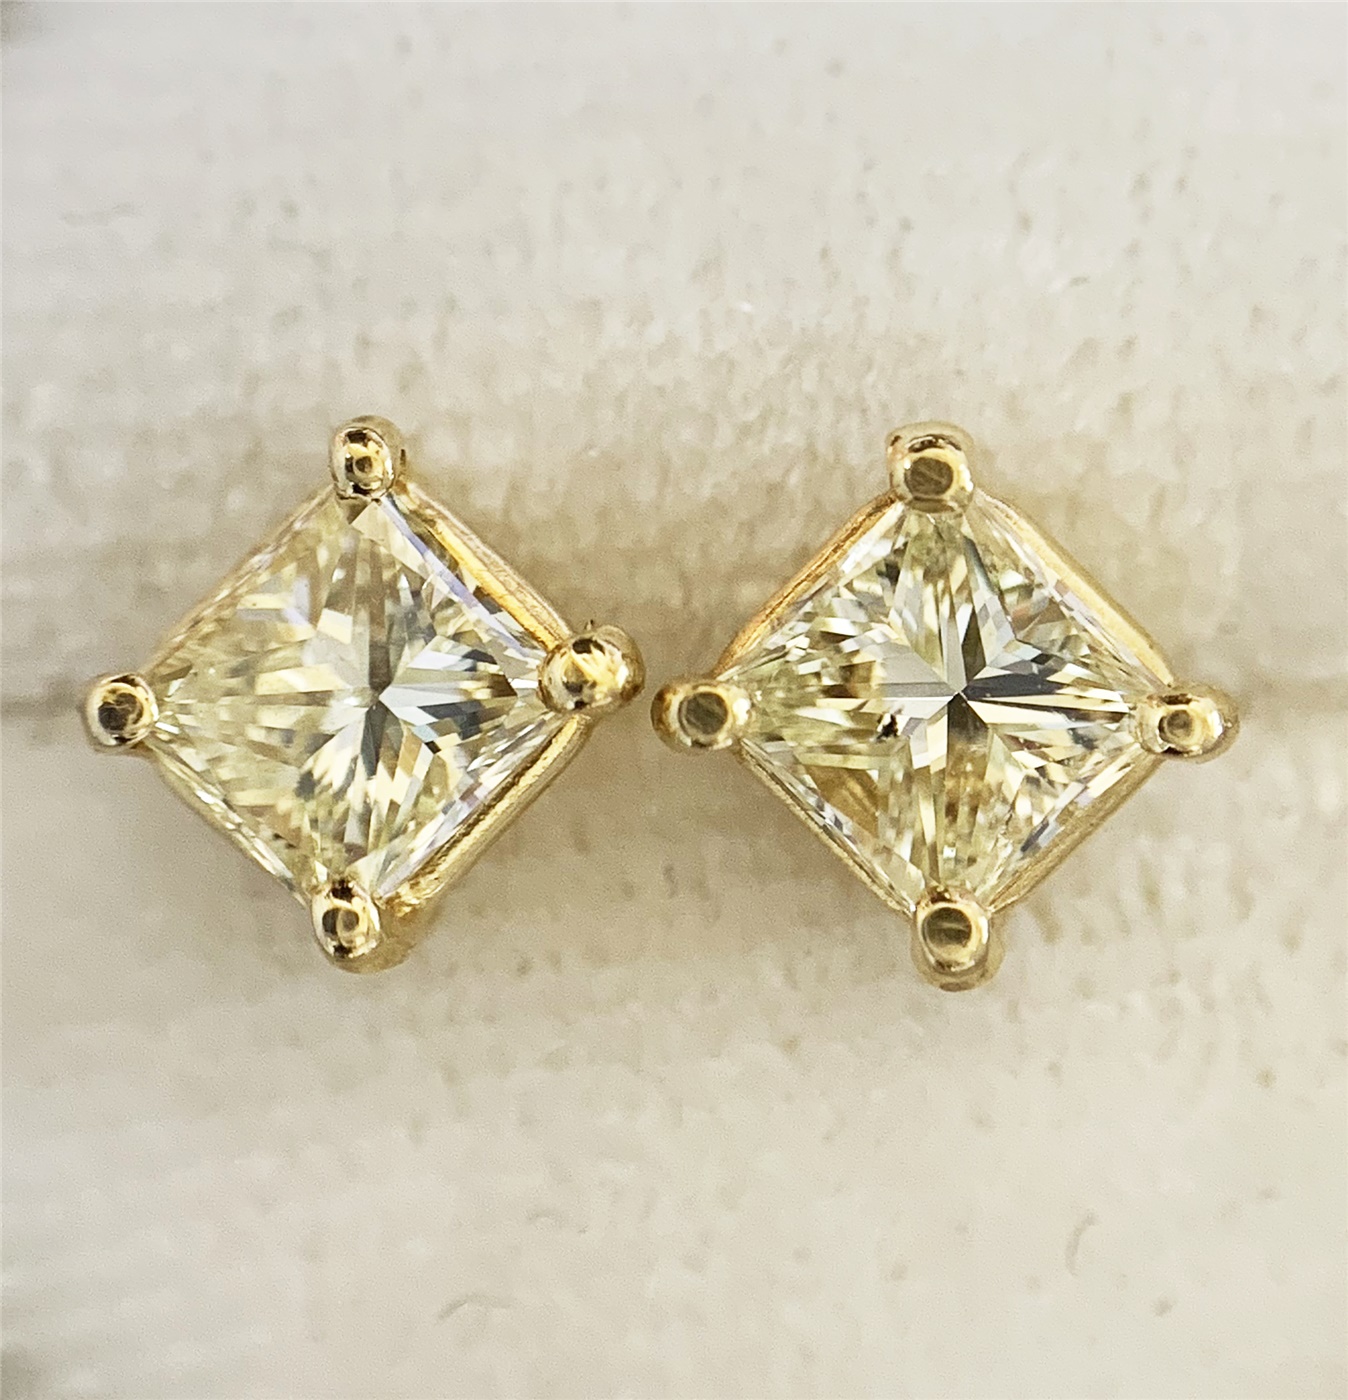 1 ct Princess Cut Diamond Stud Earrings, only $1495